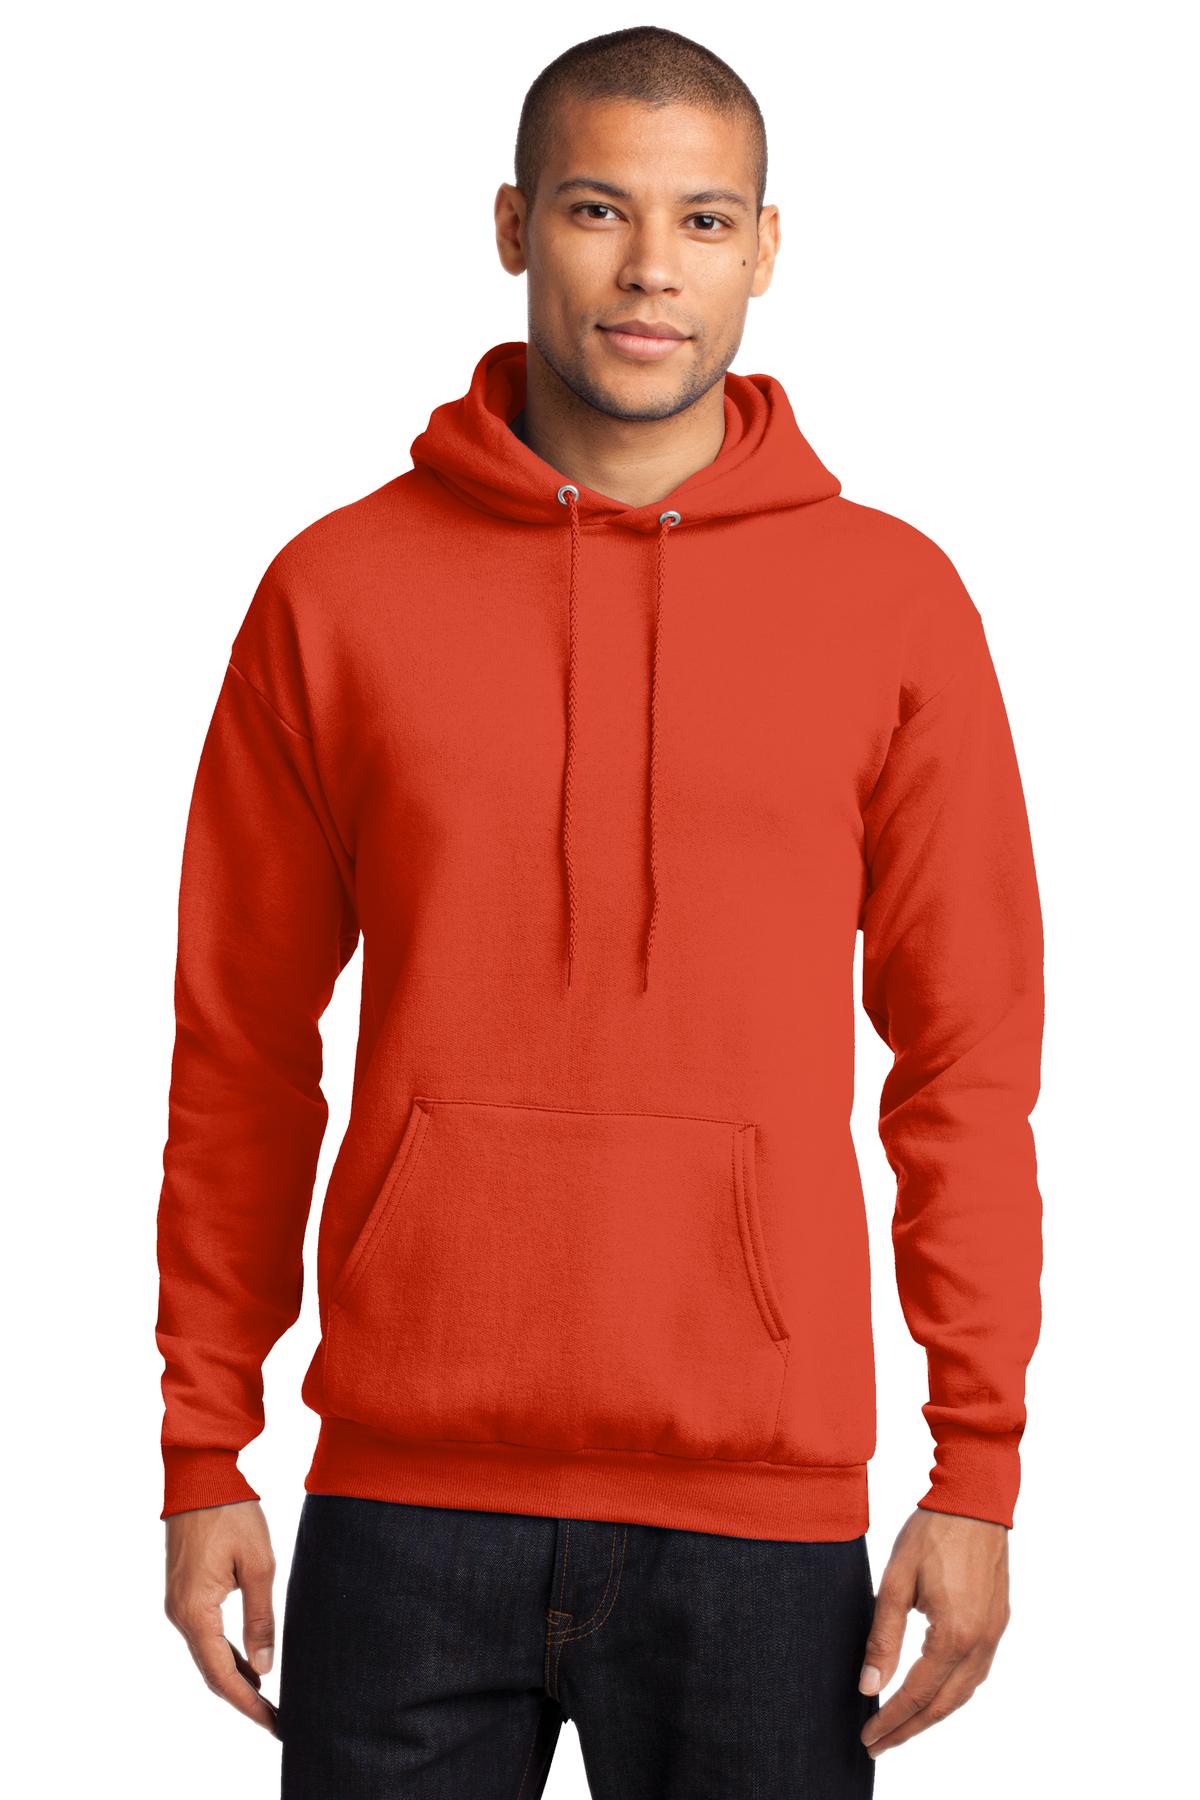 Port & Company® - Core Fleece Pullover Hooded Sweatshirt. PC78H [Orange] - DFW Impression